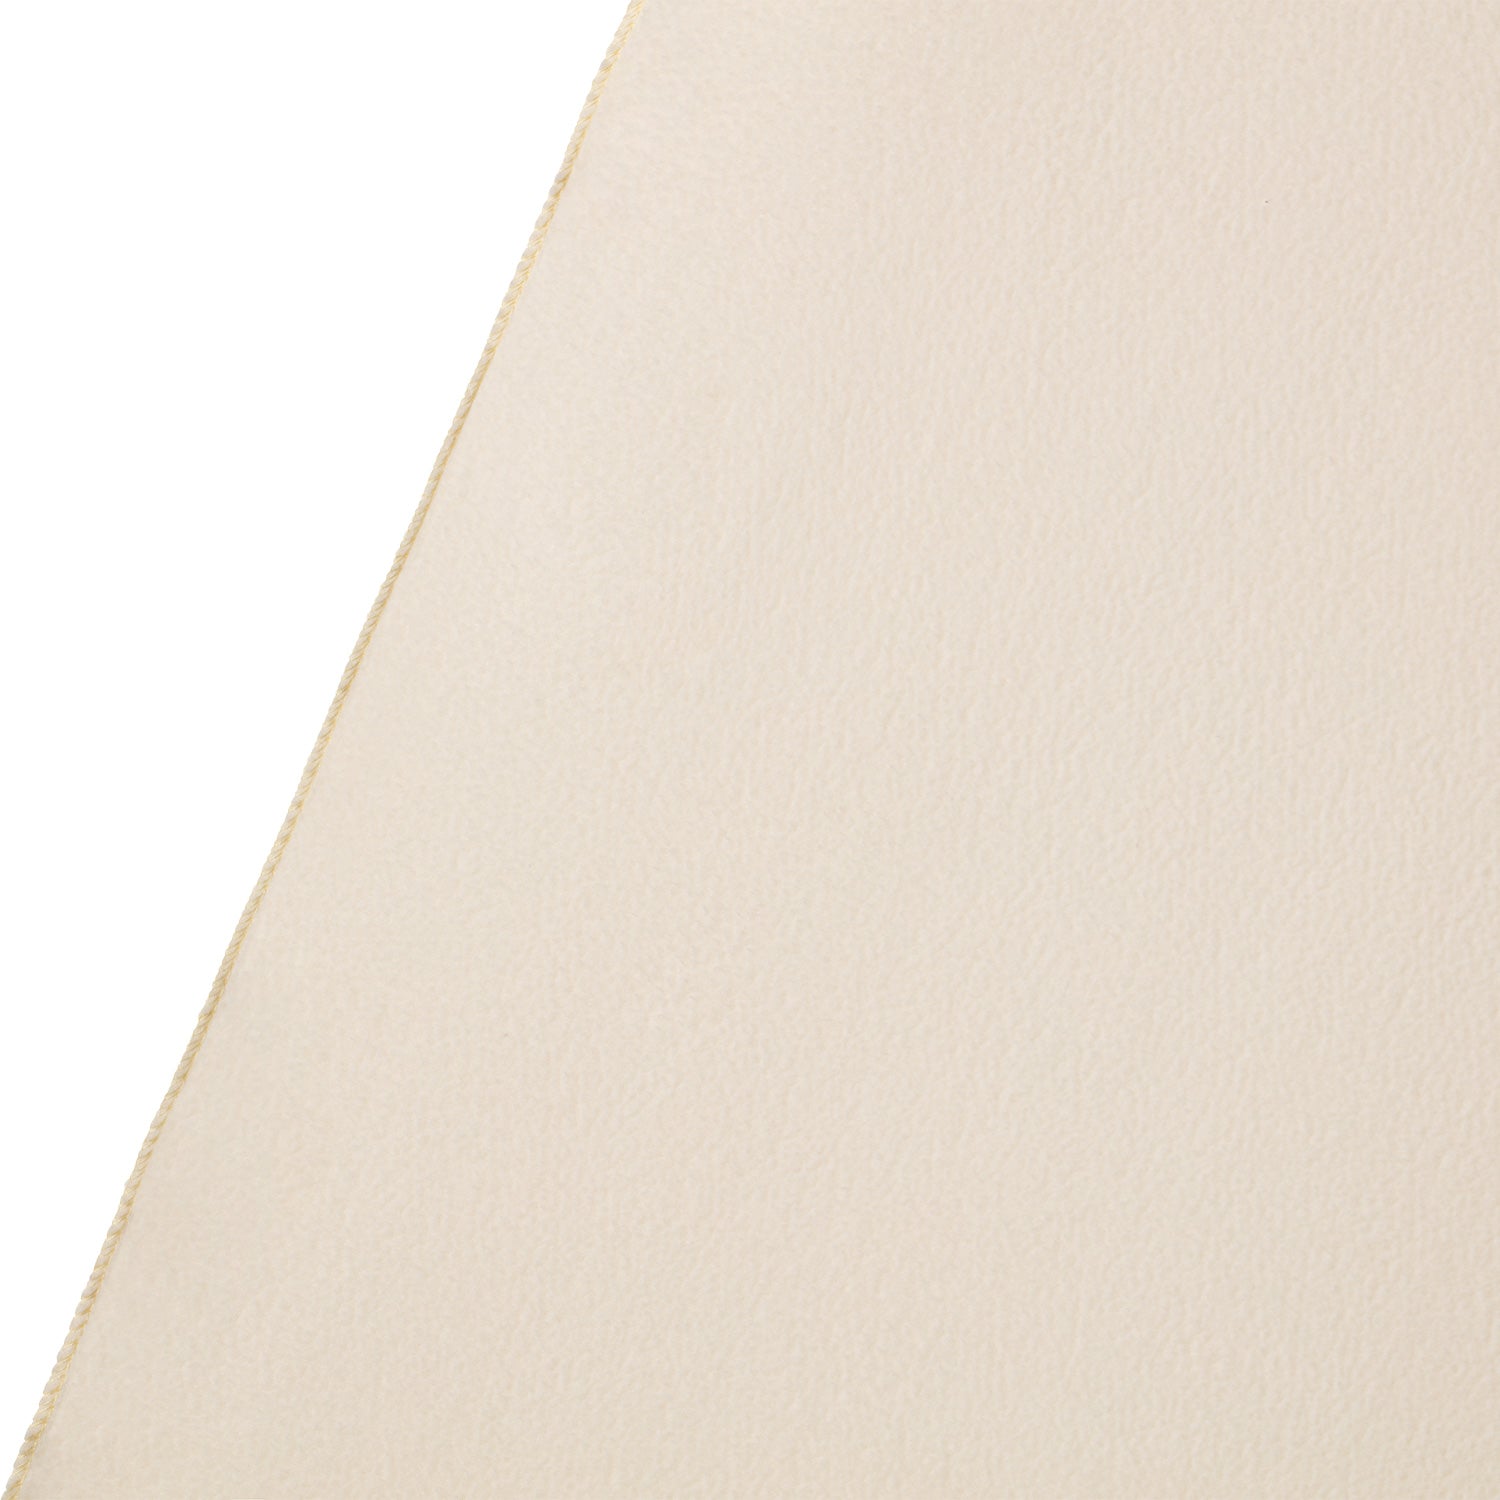 X-Drop Pro Wrinkle-Resistant Backdrop - Buttermilk White (8' x 8')